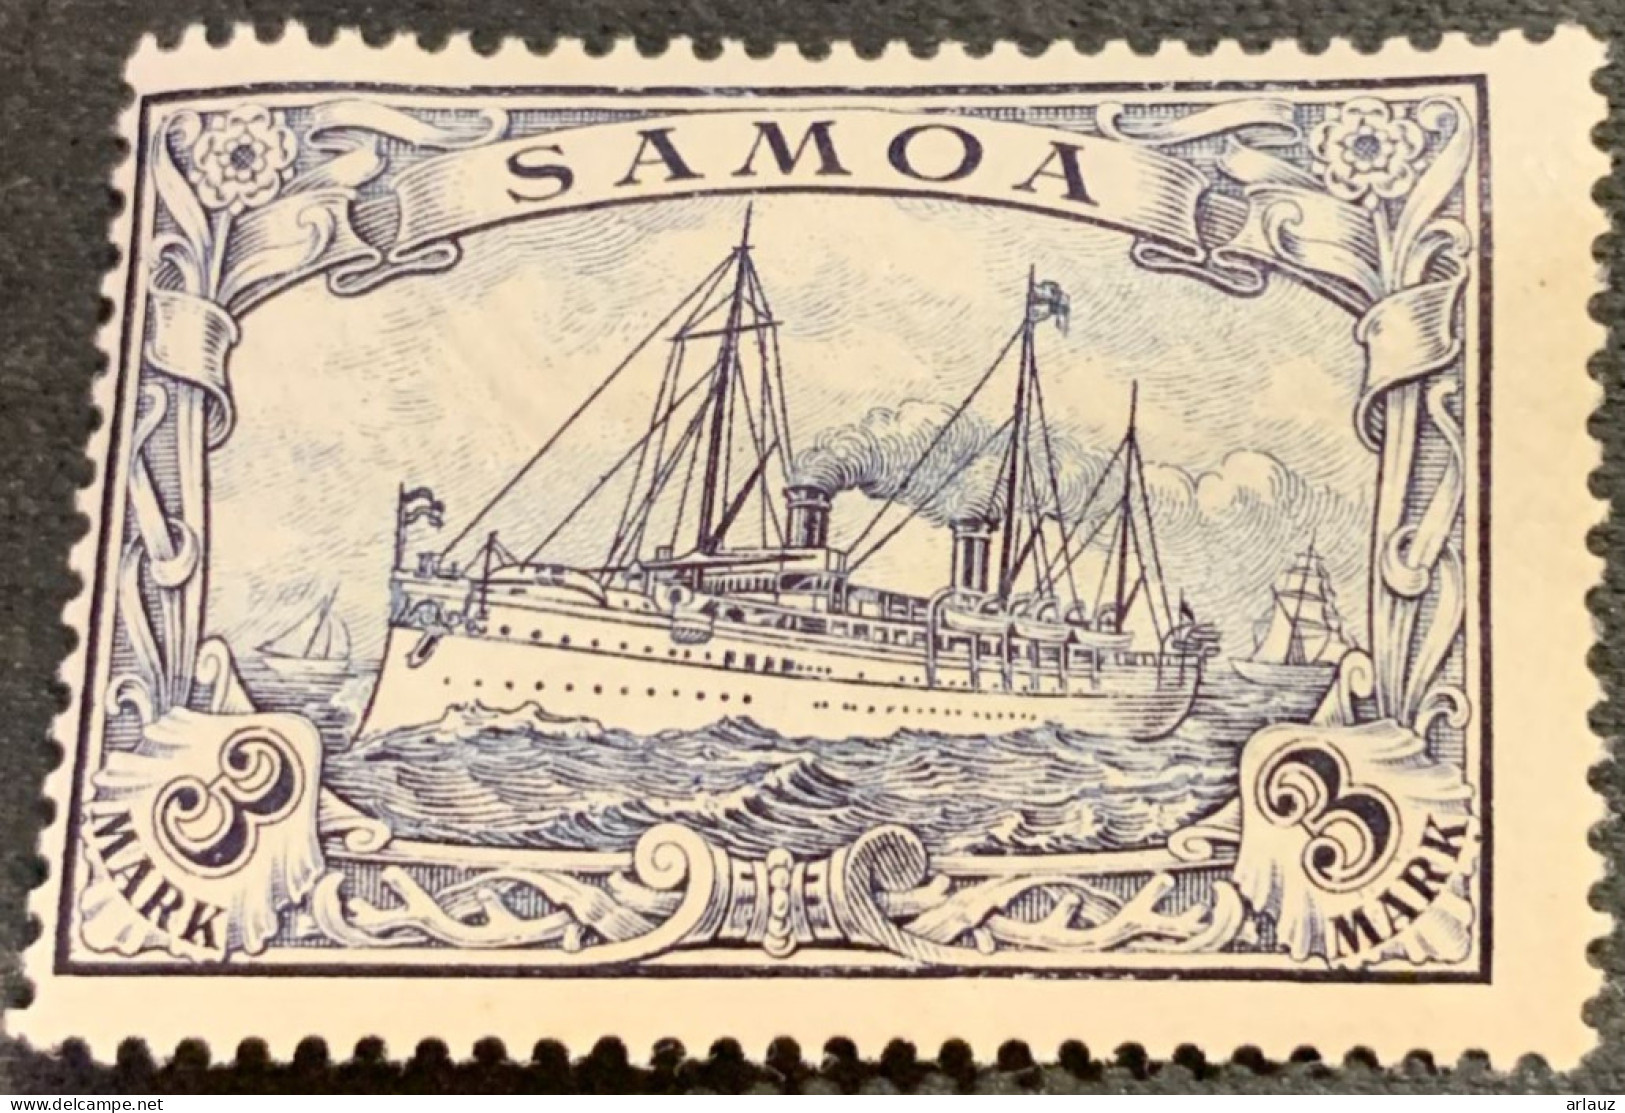 SAMOA.1900.COLONIE ALLEMANDE.MICHEL N°18. NEUF.24B13 - Samoa